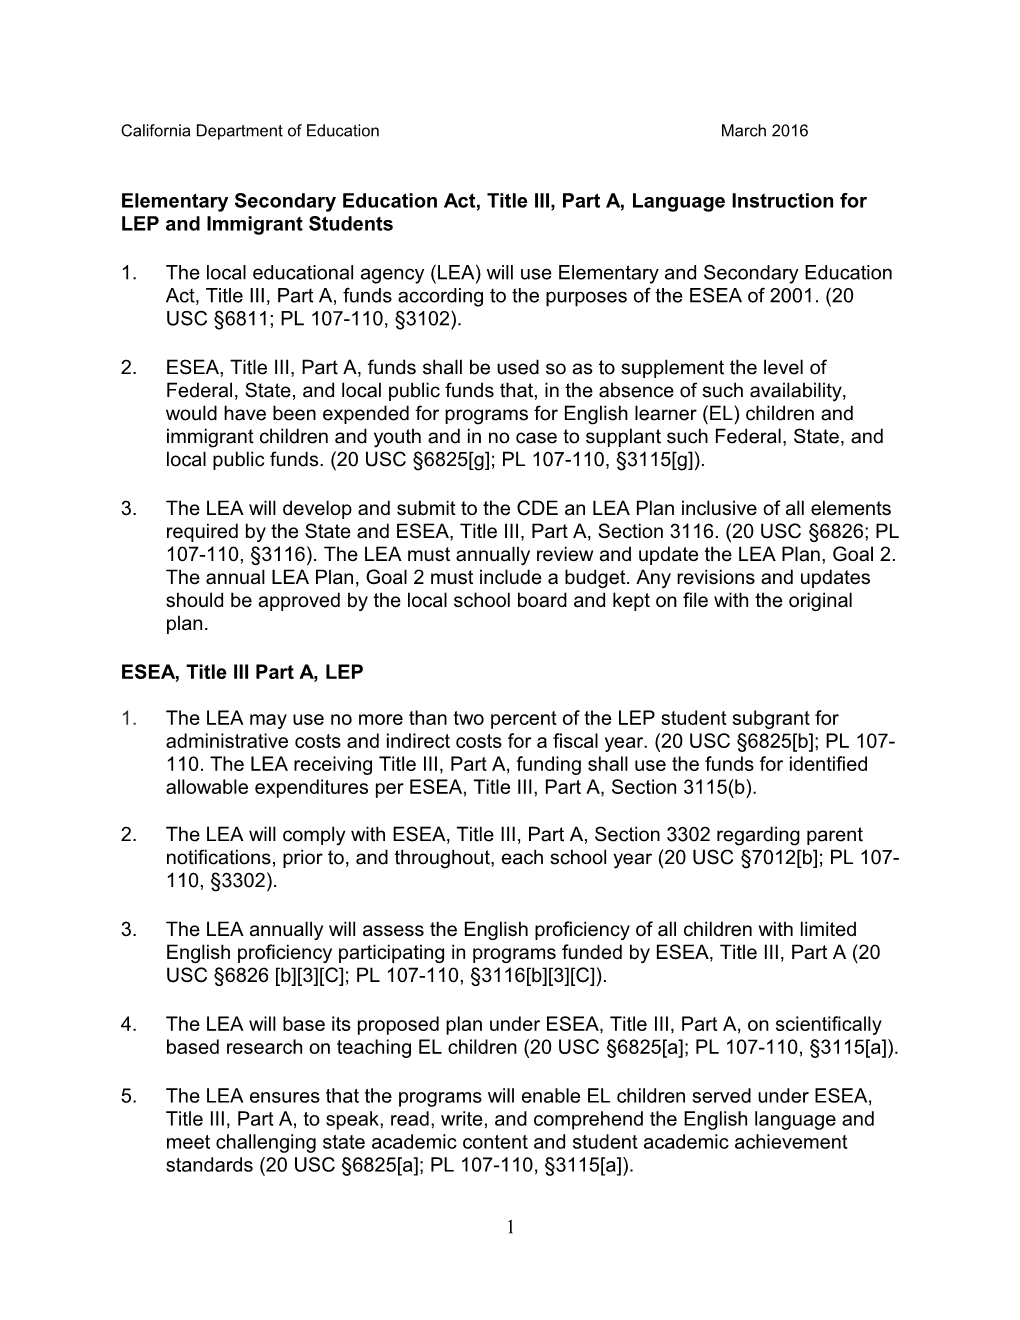 Att-16: Title III - Imm Education Subgrant Program (CA Dept of Education)